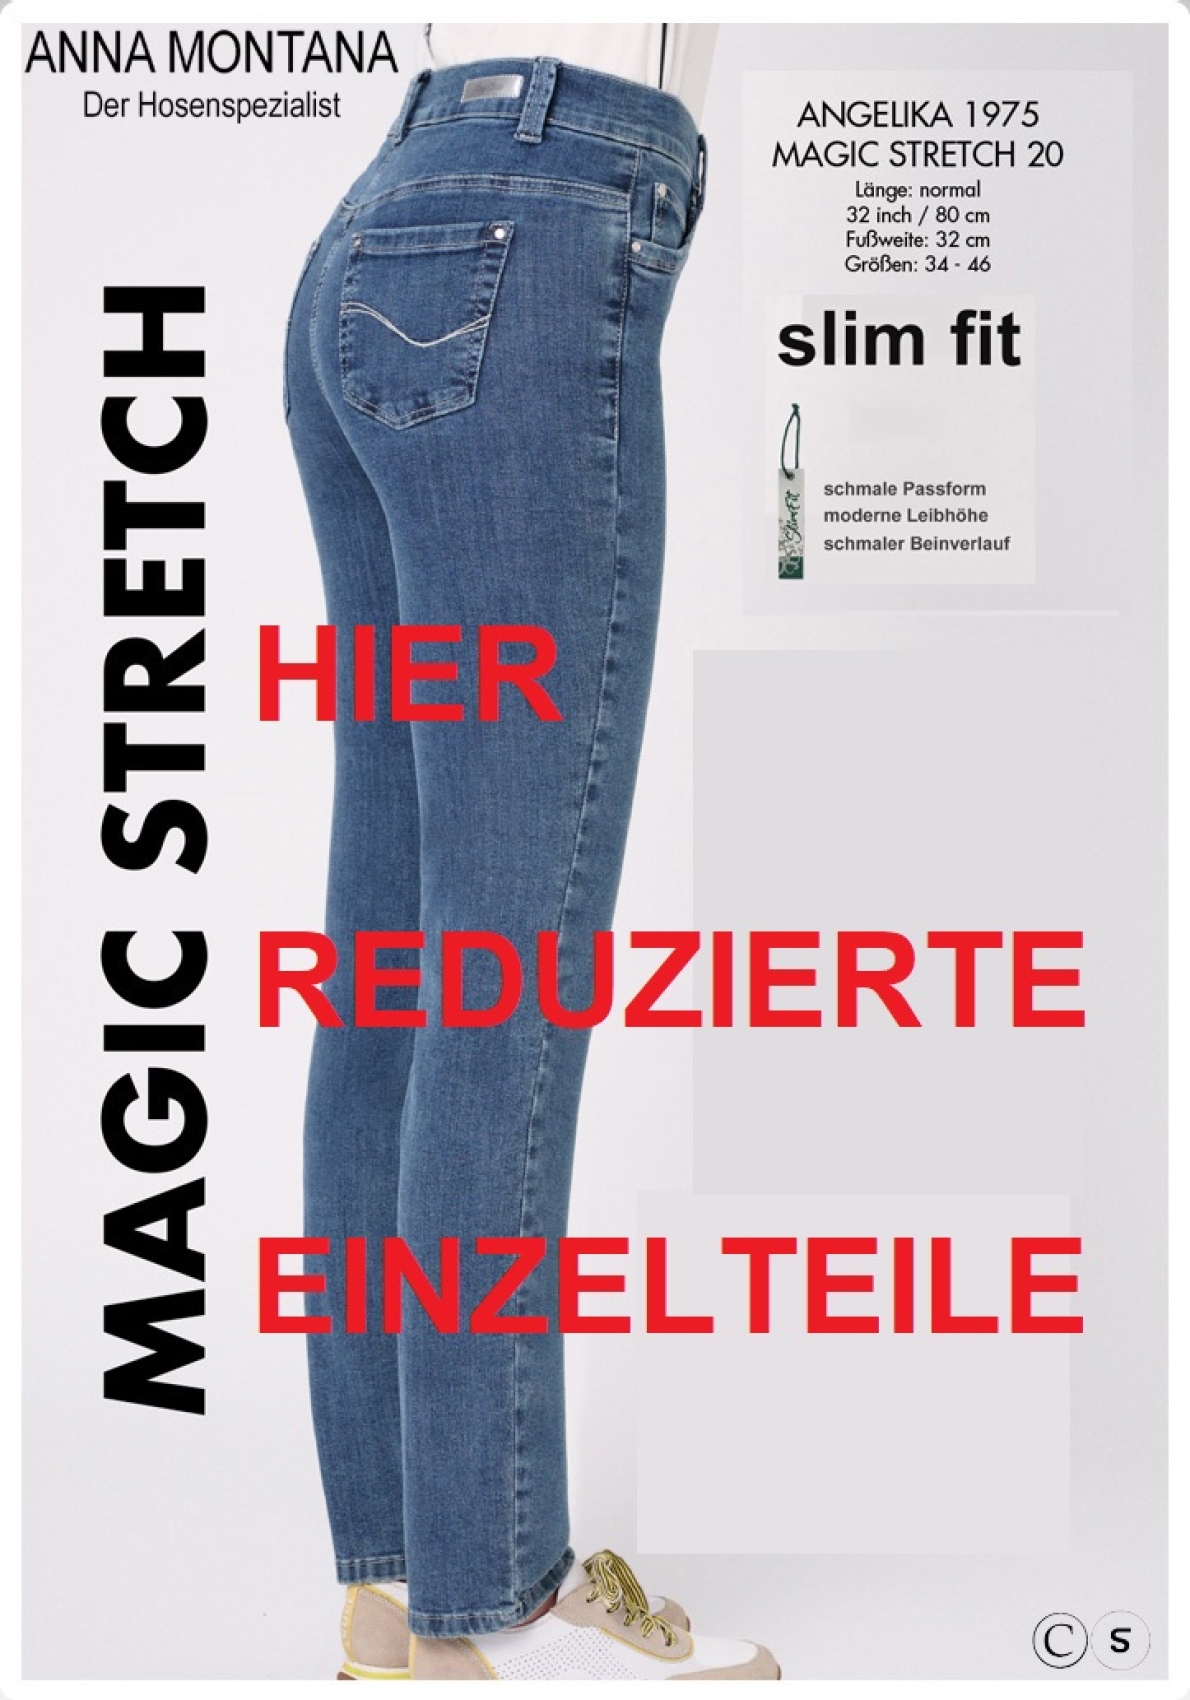 Reduces Angelika 1975 / ER / Magic Stretch Trousers /Jeans ANNA MONTANA - Kopie